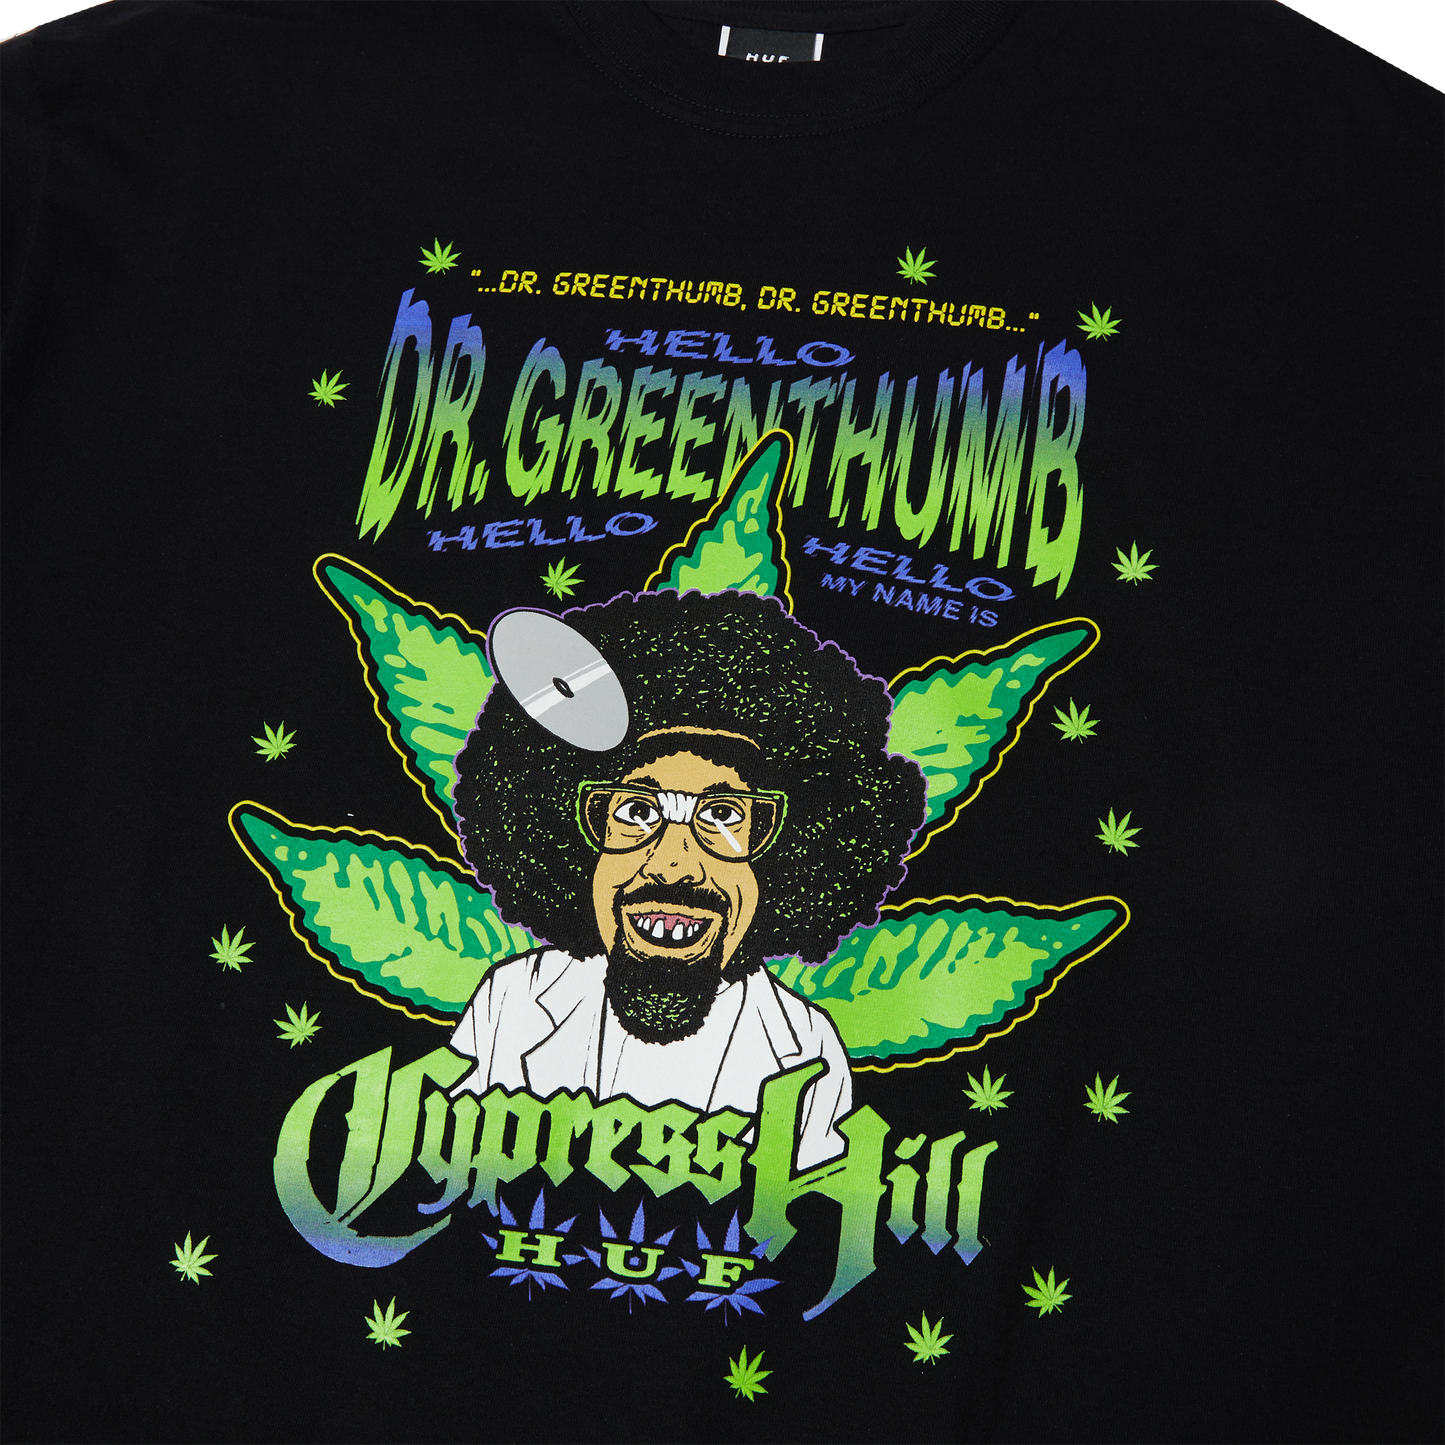 HUF X Cypress Hill Dr Greenthumb T-Shirt Black